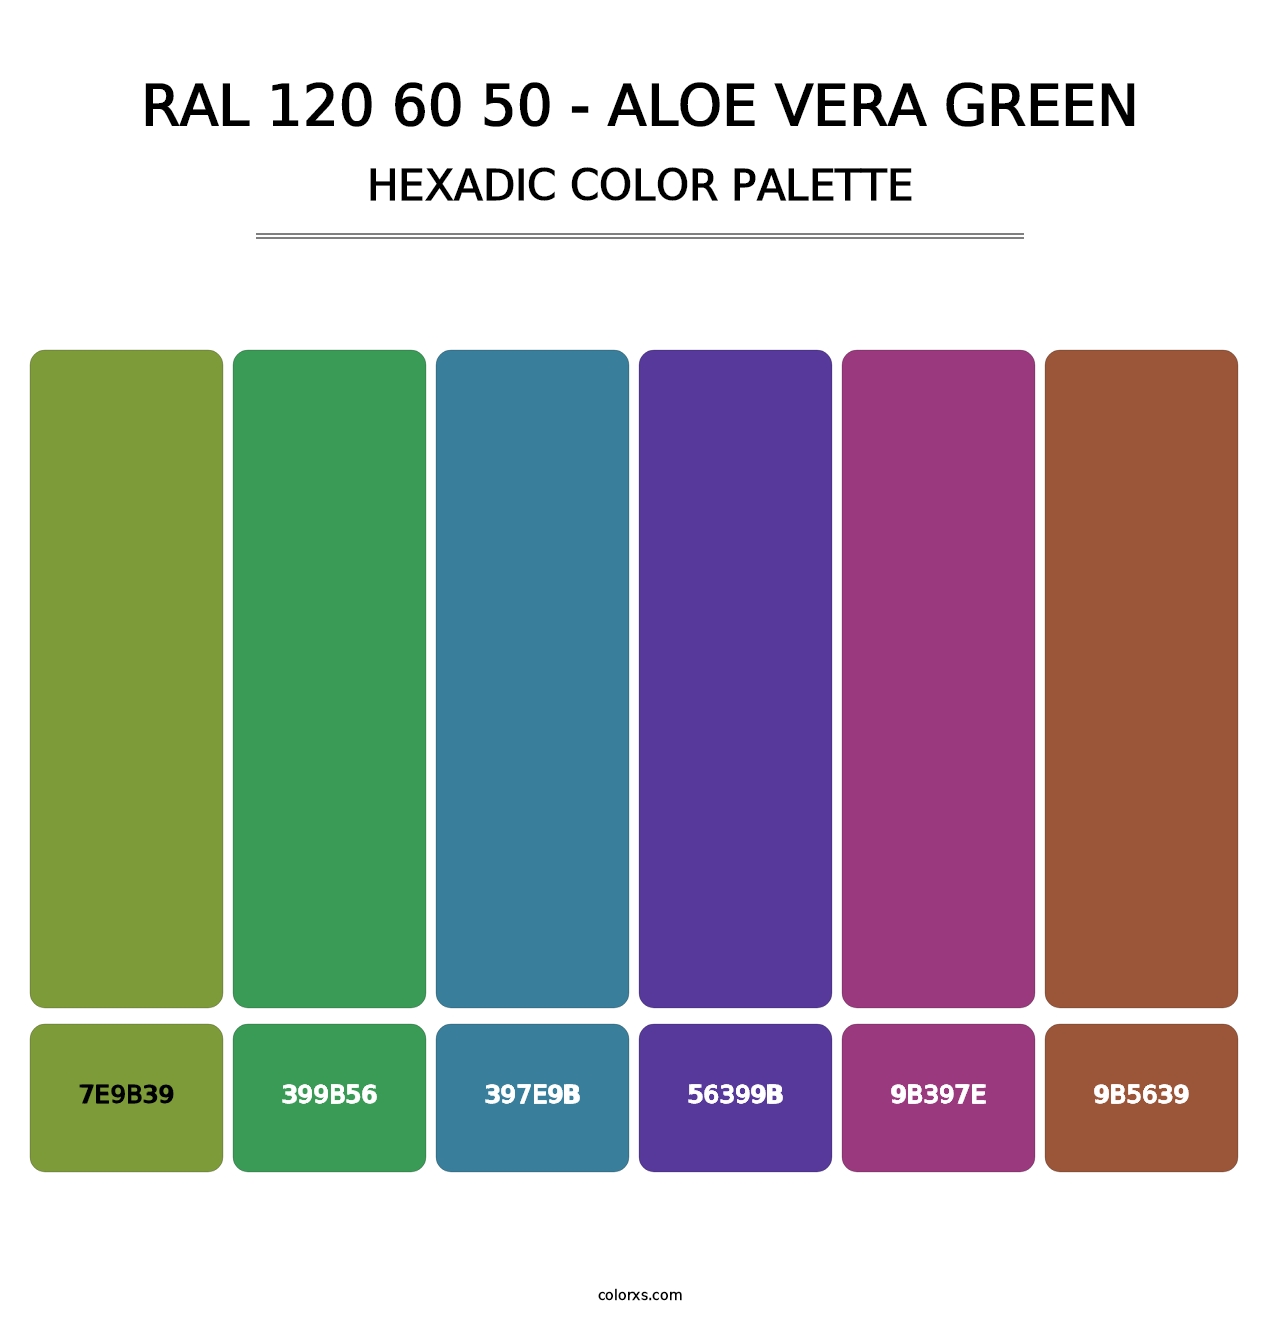 RAL 120 60 50 - Aloe Vera Green - Hexadic Color Palette